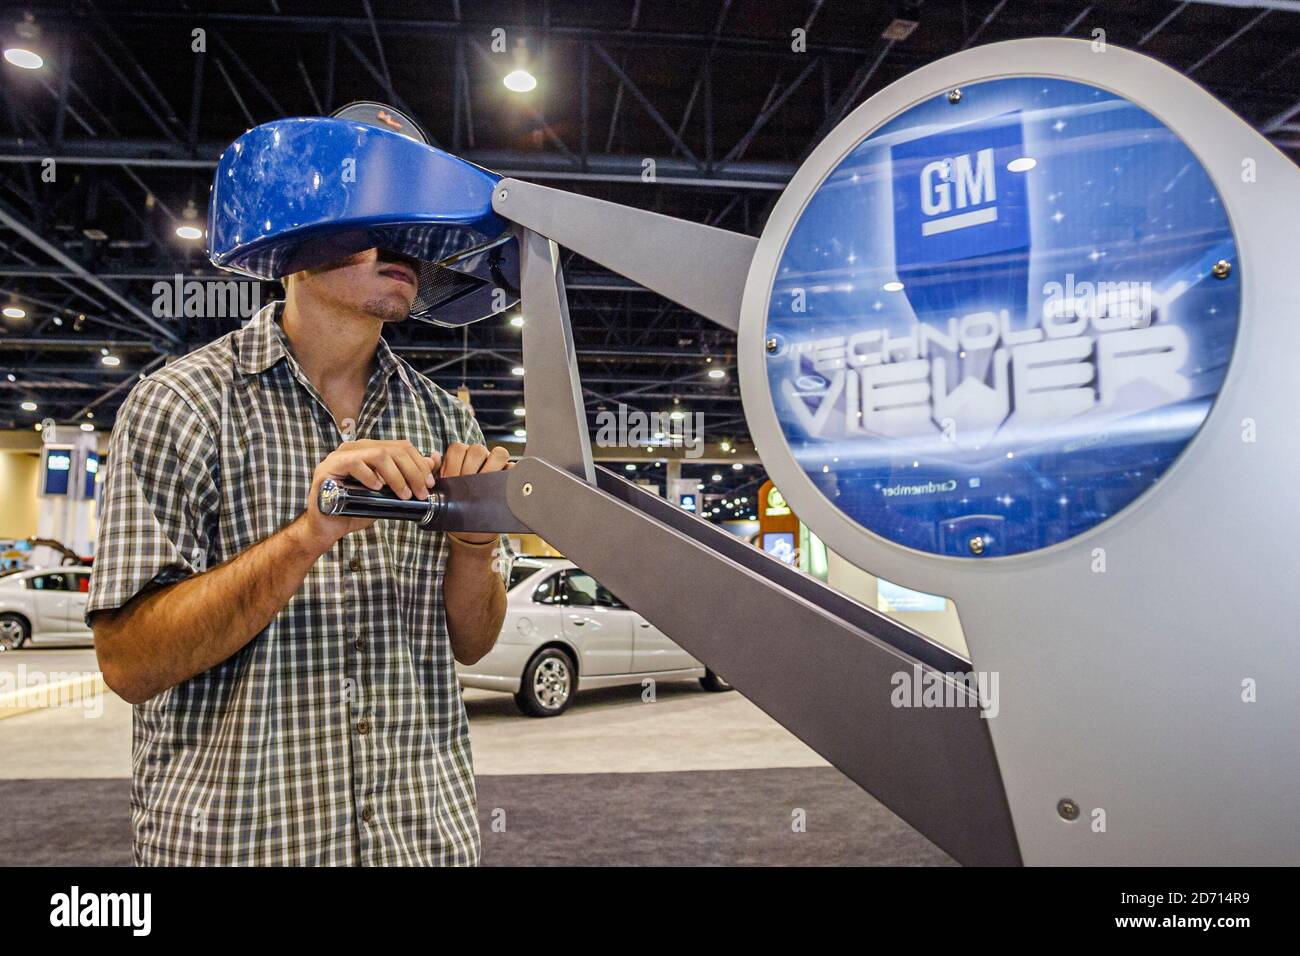 Florida,Miami Beach Convention Center,Centre International Auto Show,evento annuale simulazione simulazione simulazione virtuale di guida della realtà virtuale,GM Technology Viewer,ma Foto Stock